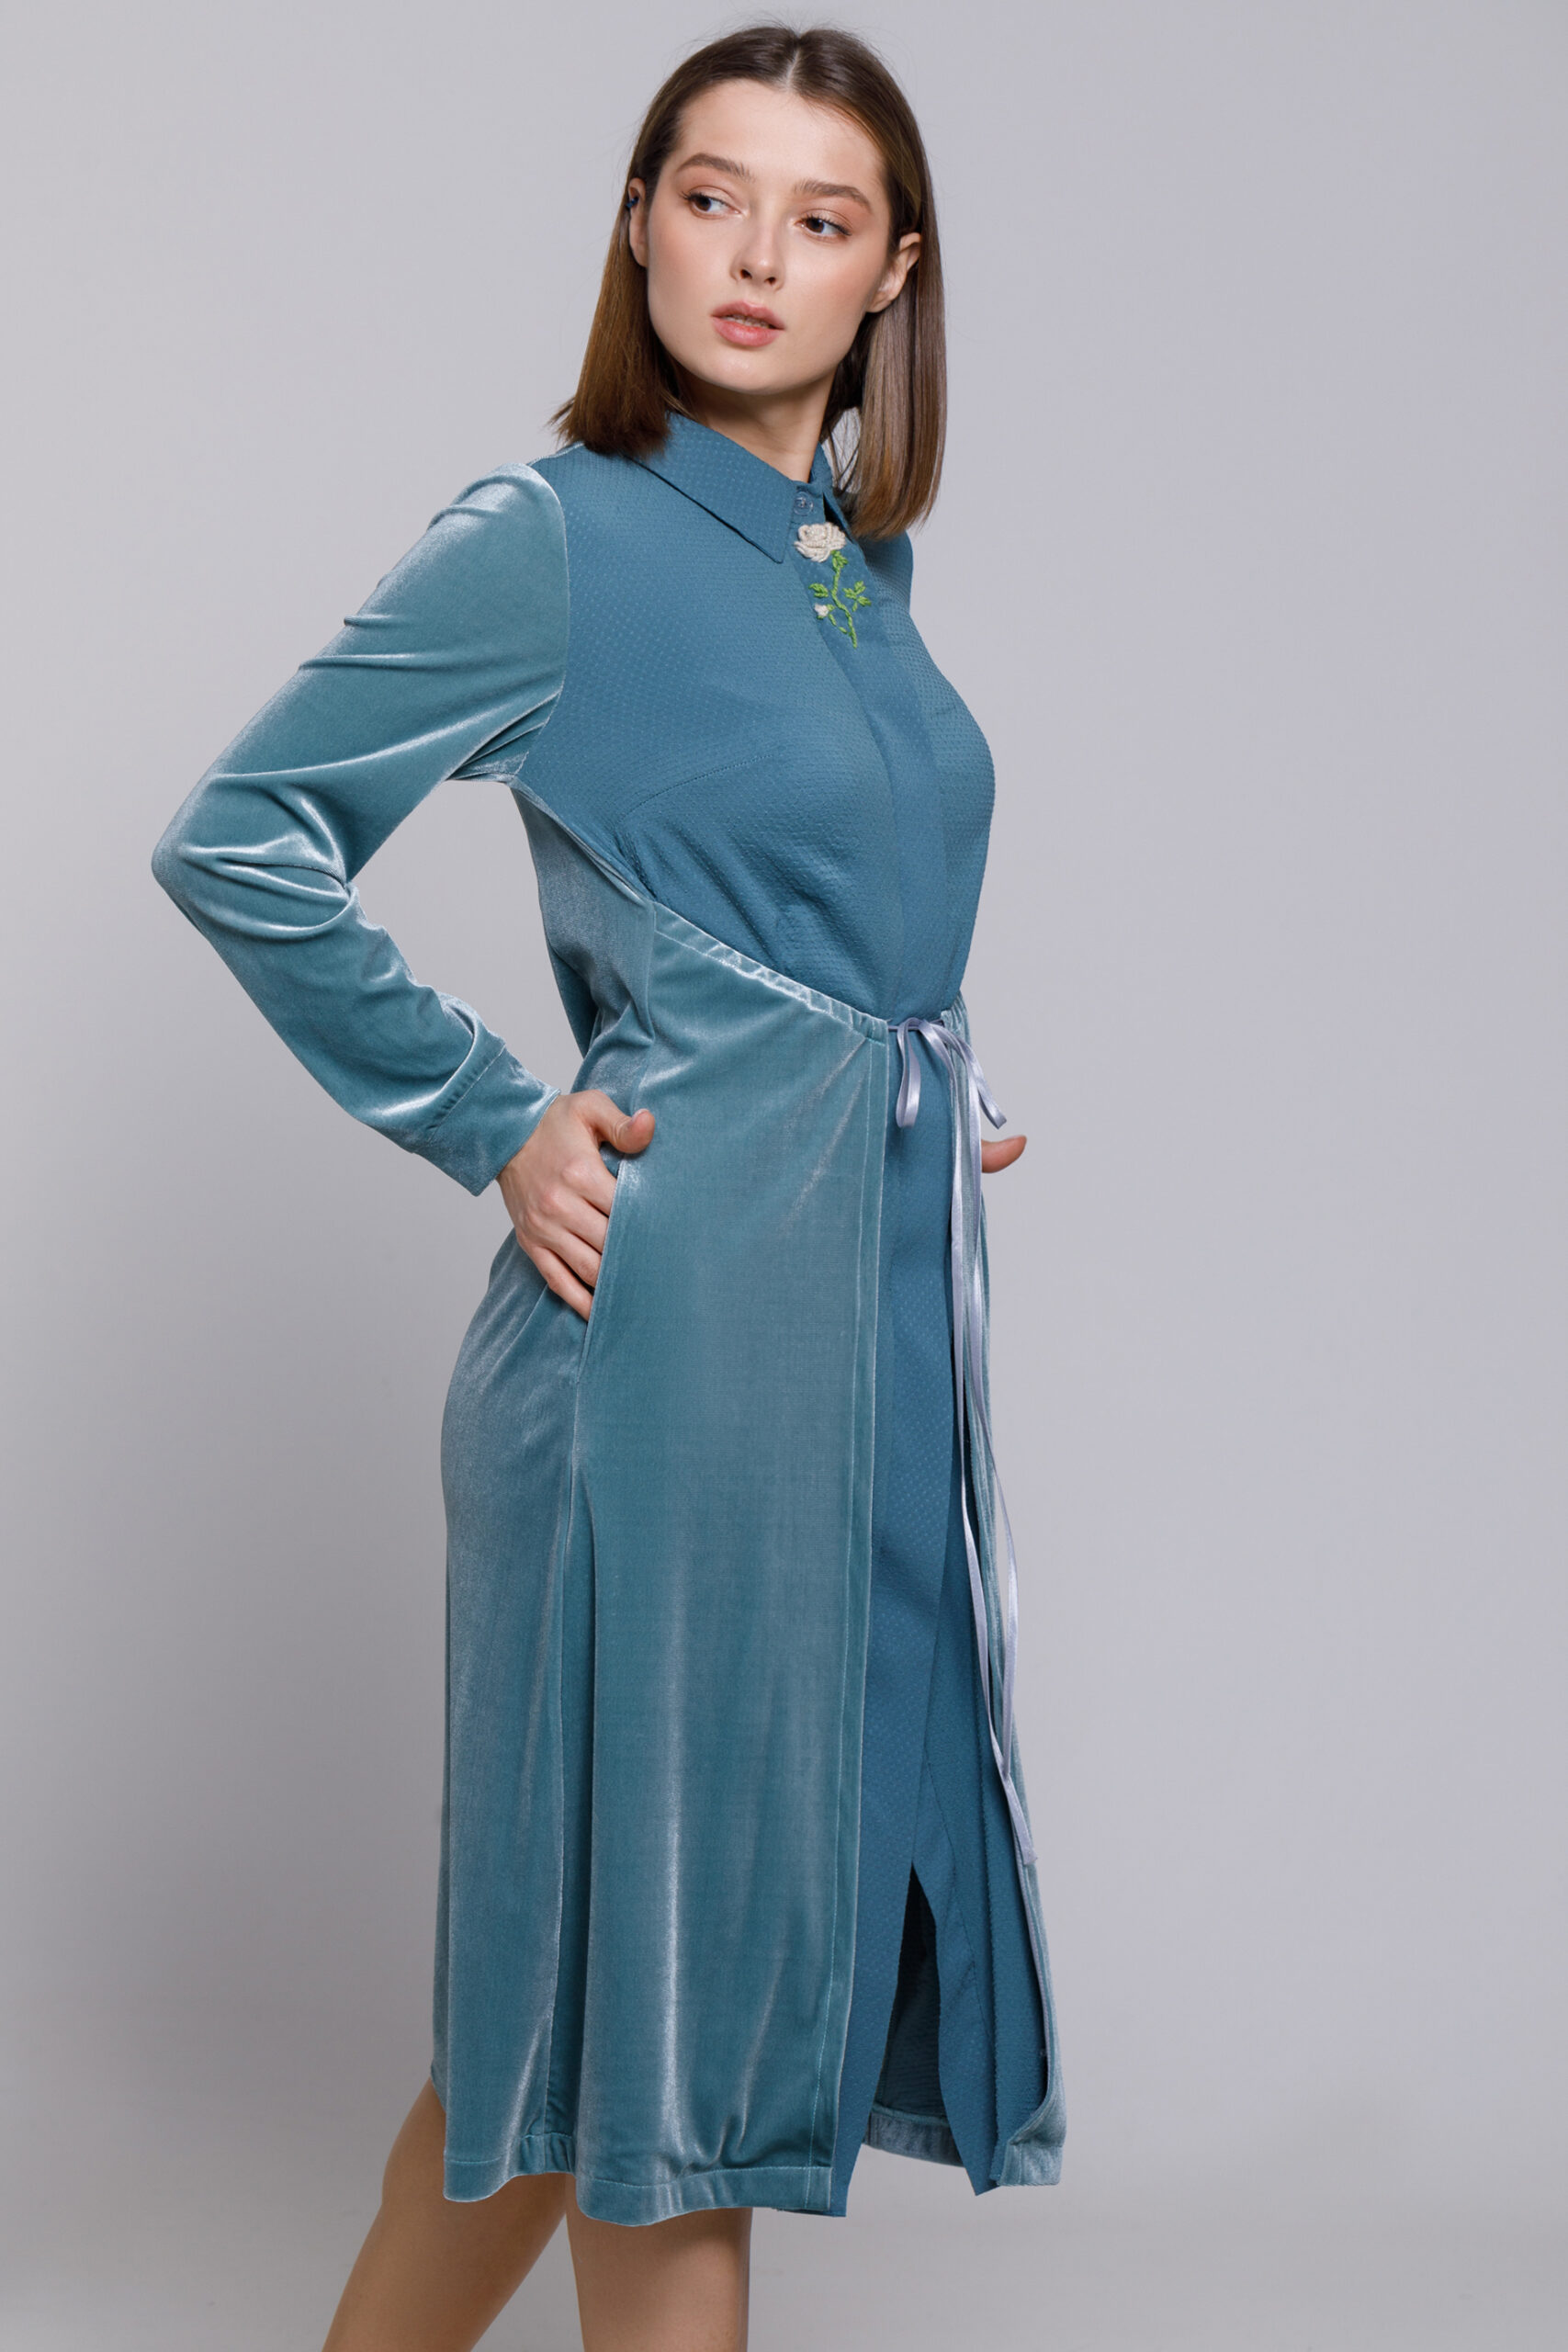 STORY dress in blue velvet and viscose. Natural fabrics, original design, handmade embroidery